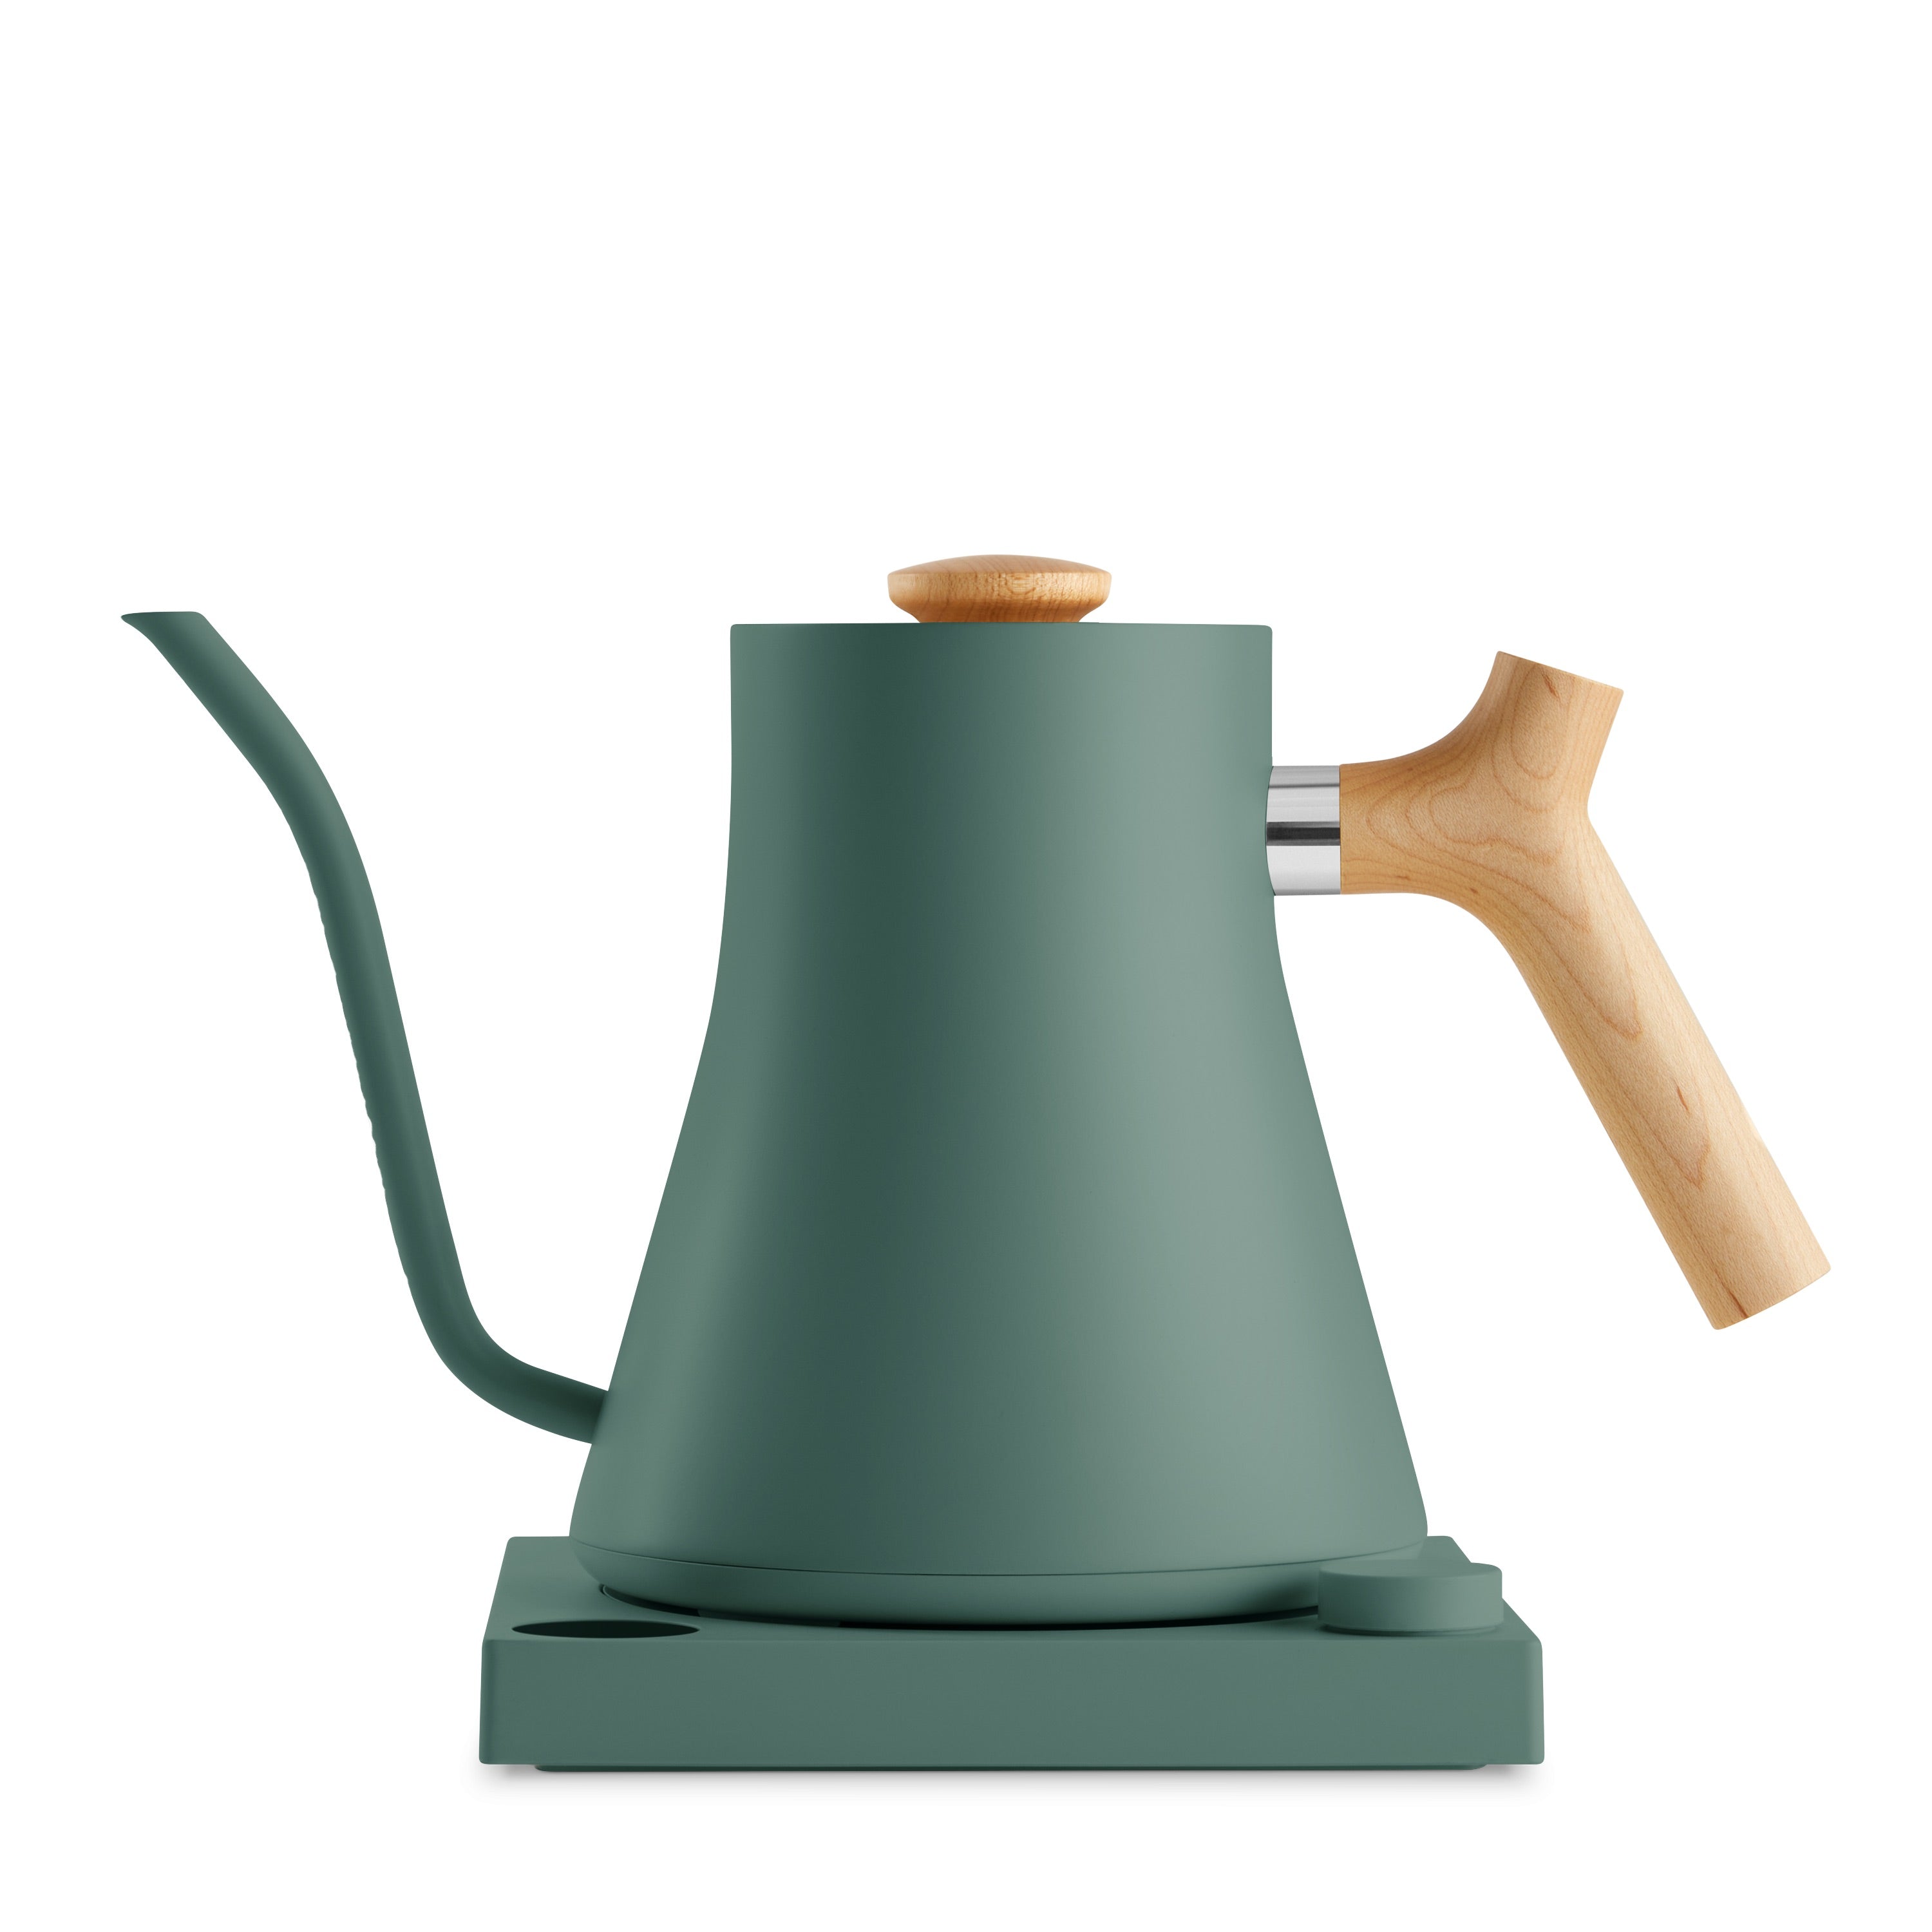 Aroma Professional 7 Cup/1l Electric Kettle, Coffee, Tea & Espresso, Furniture & Appliances